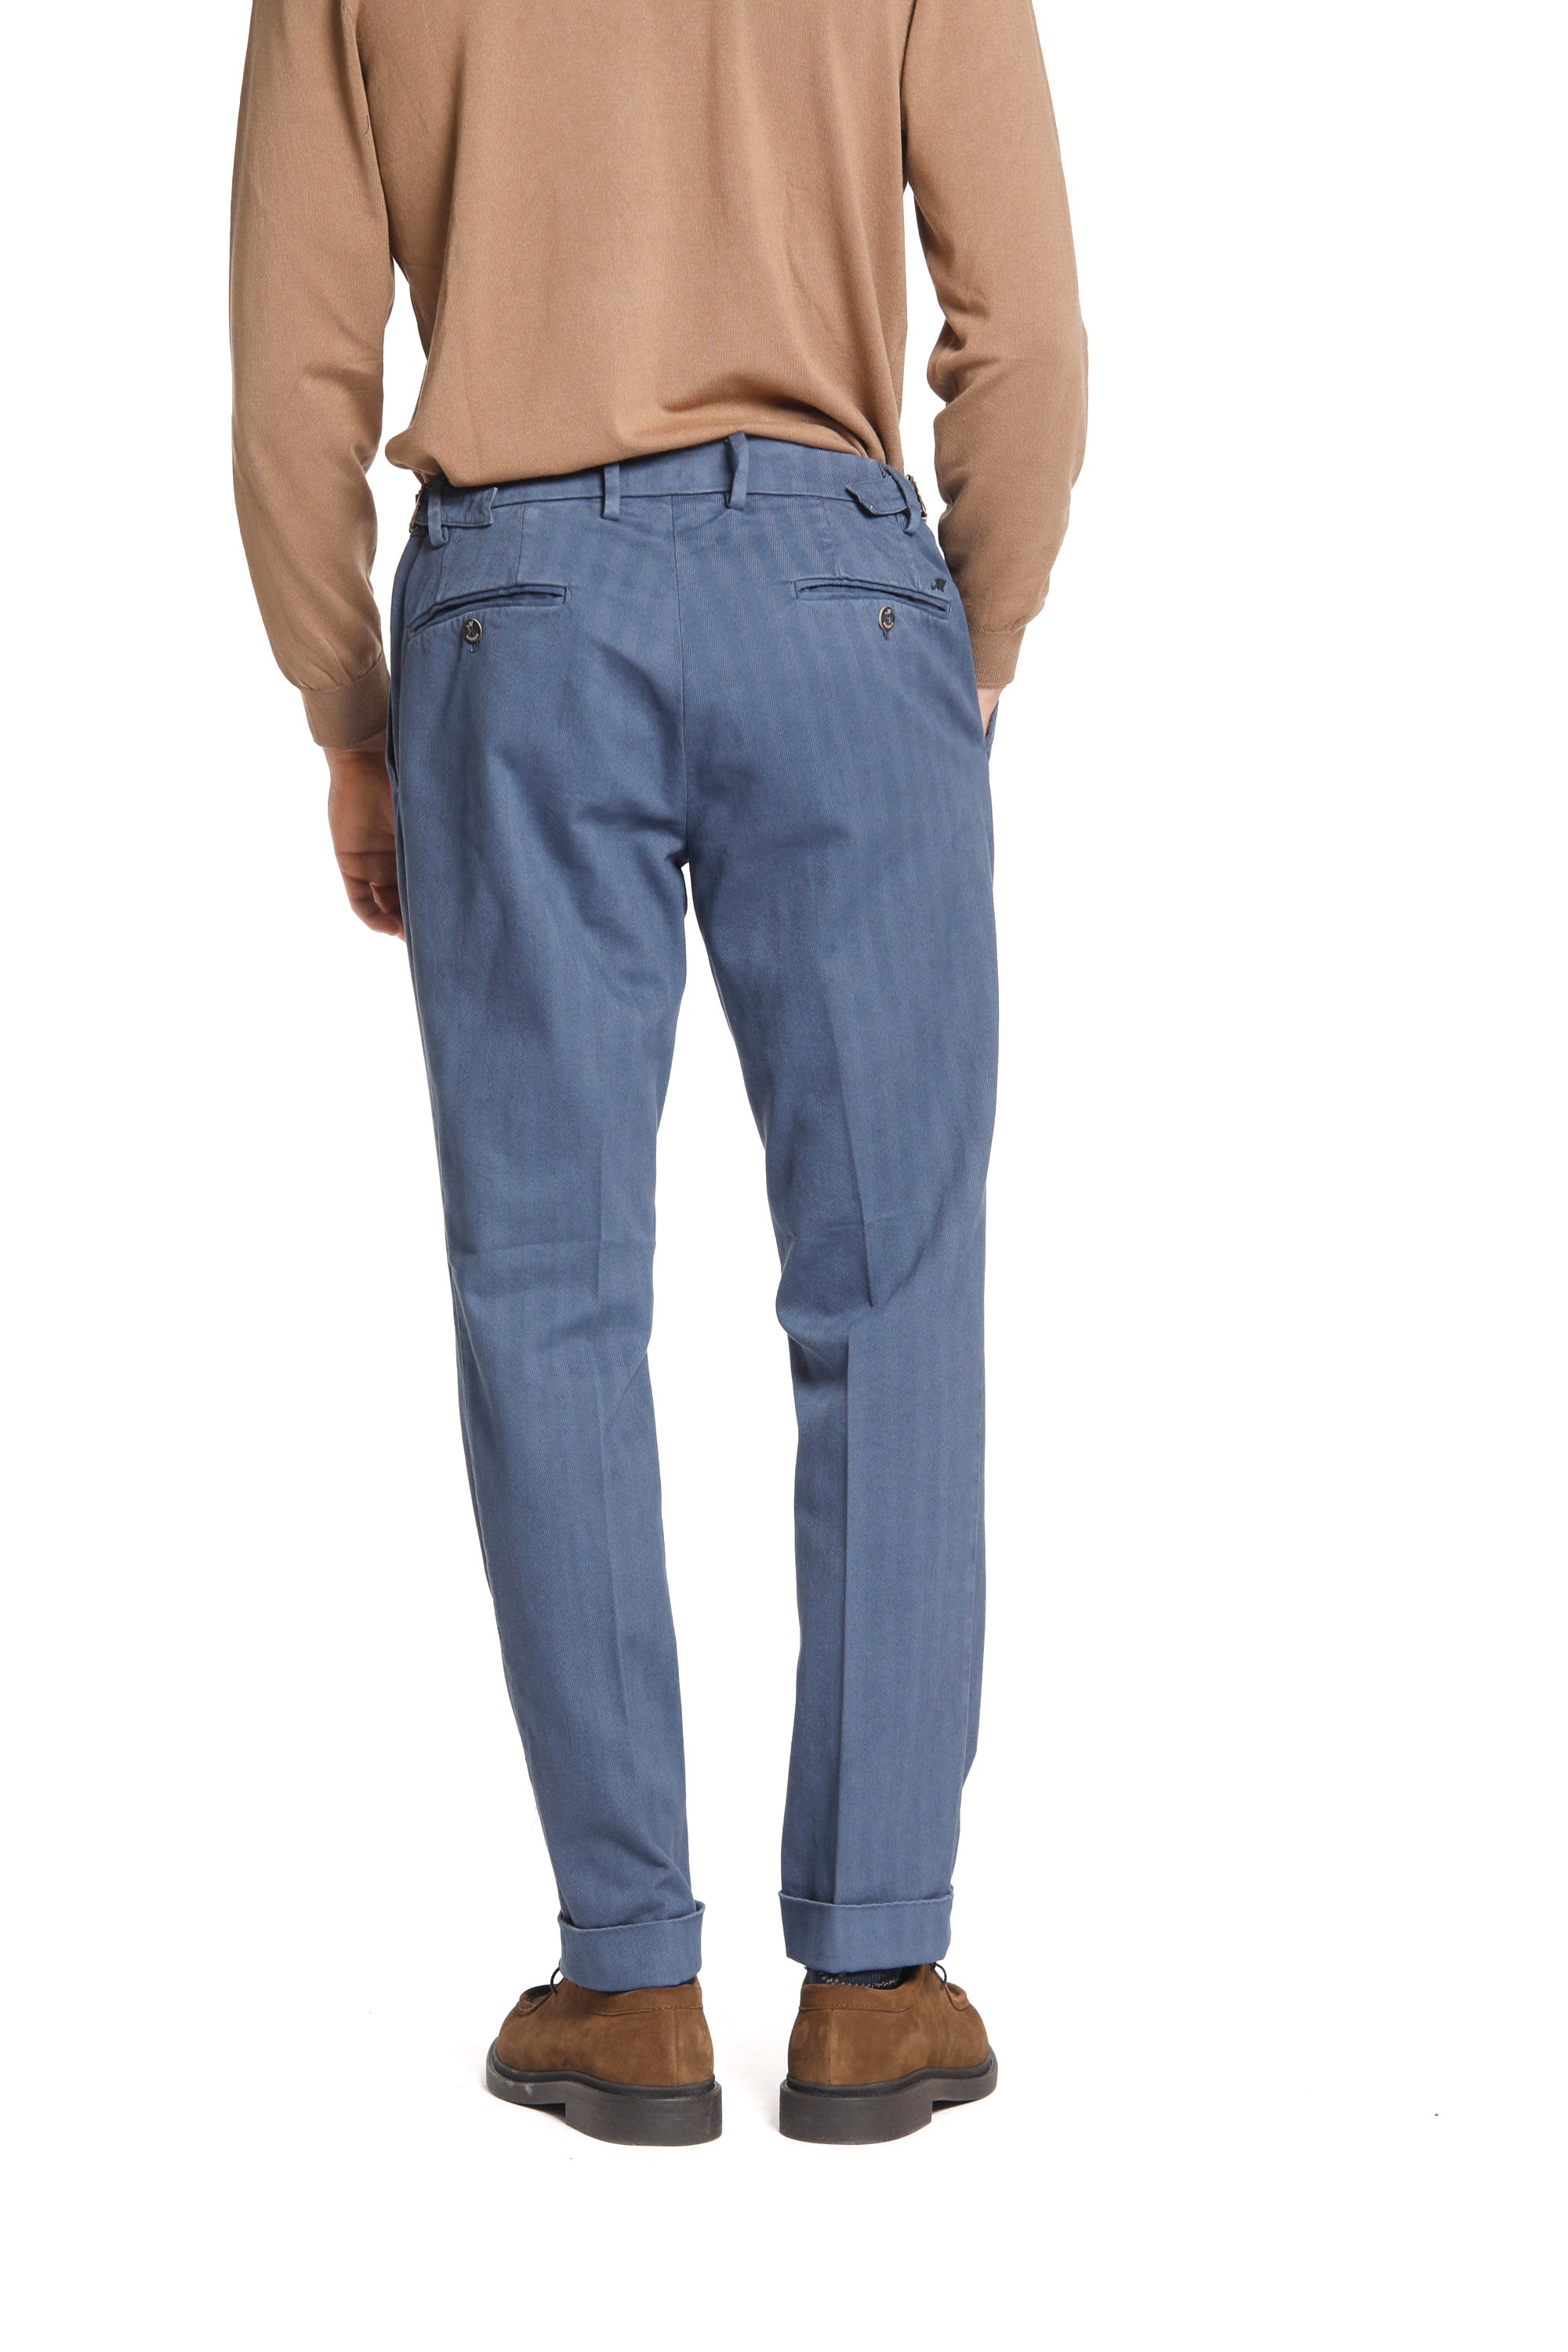 Genova Style pantalon chino homme avec motif en résca coupe regular